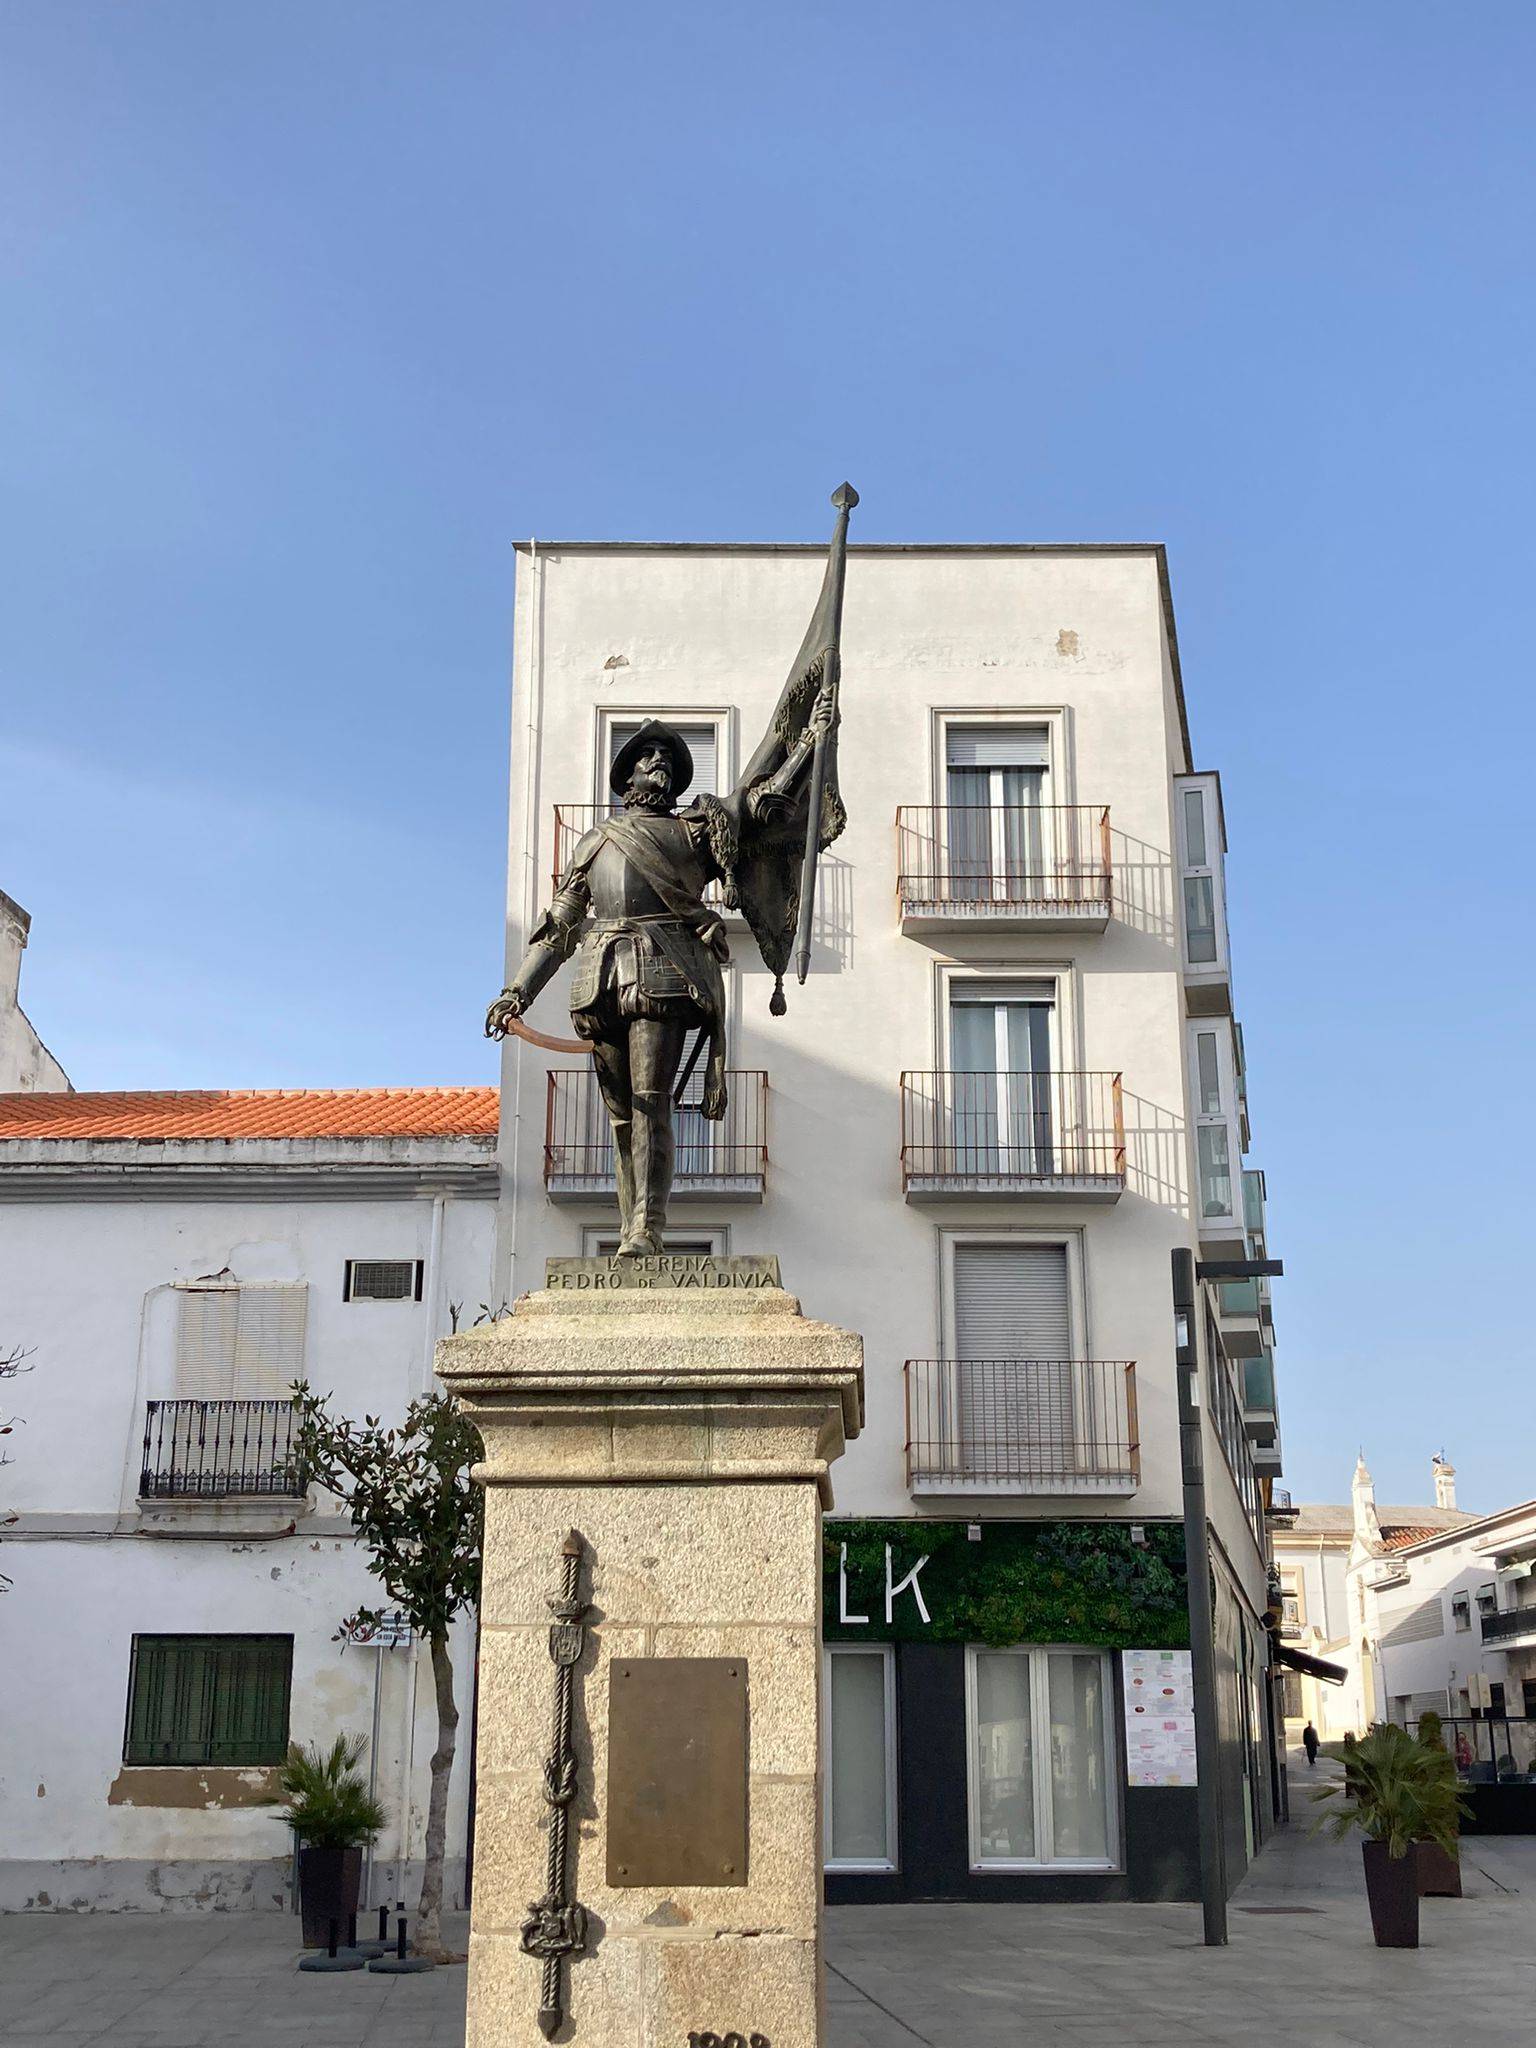 Estatua de Pedro de Valdivia en Villanueva, España. Créditos: Helena Cortés 